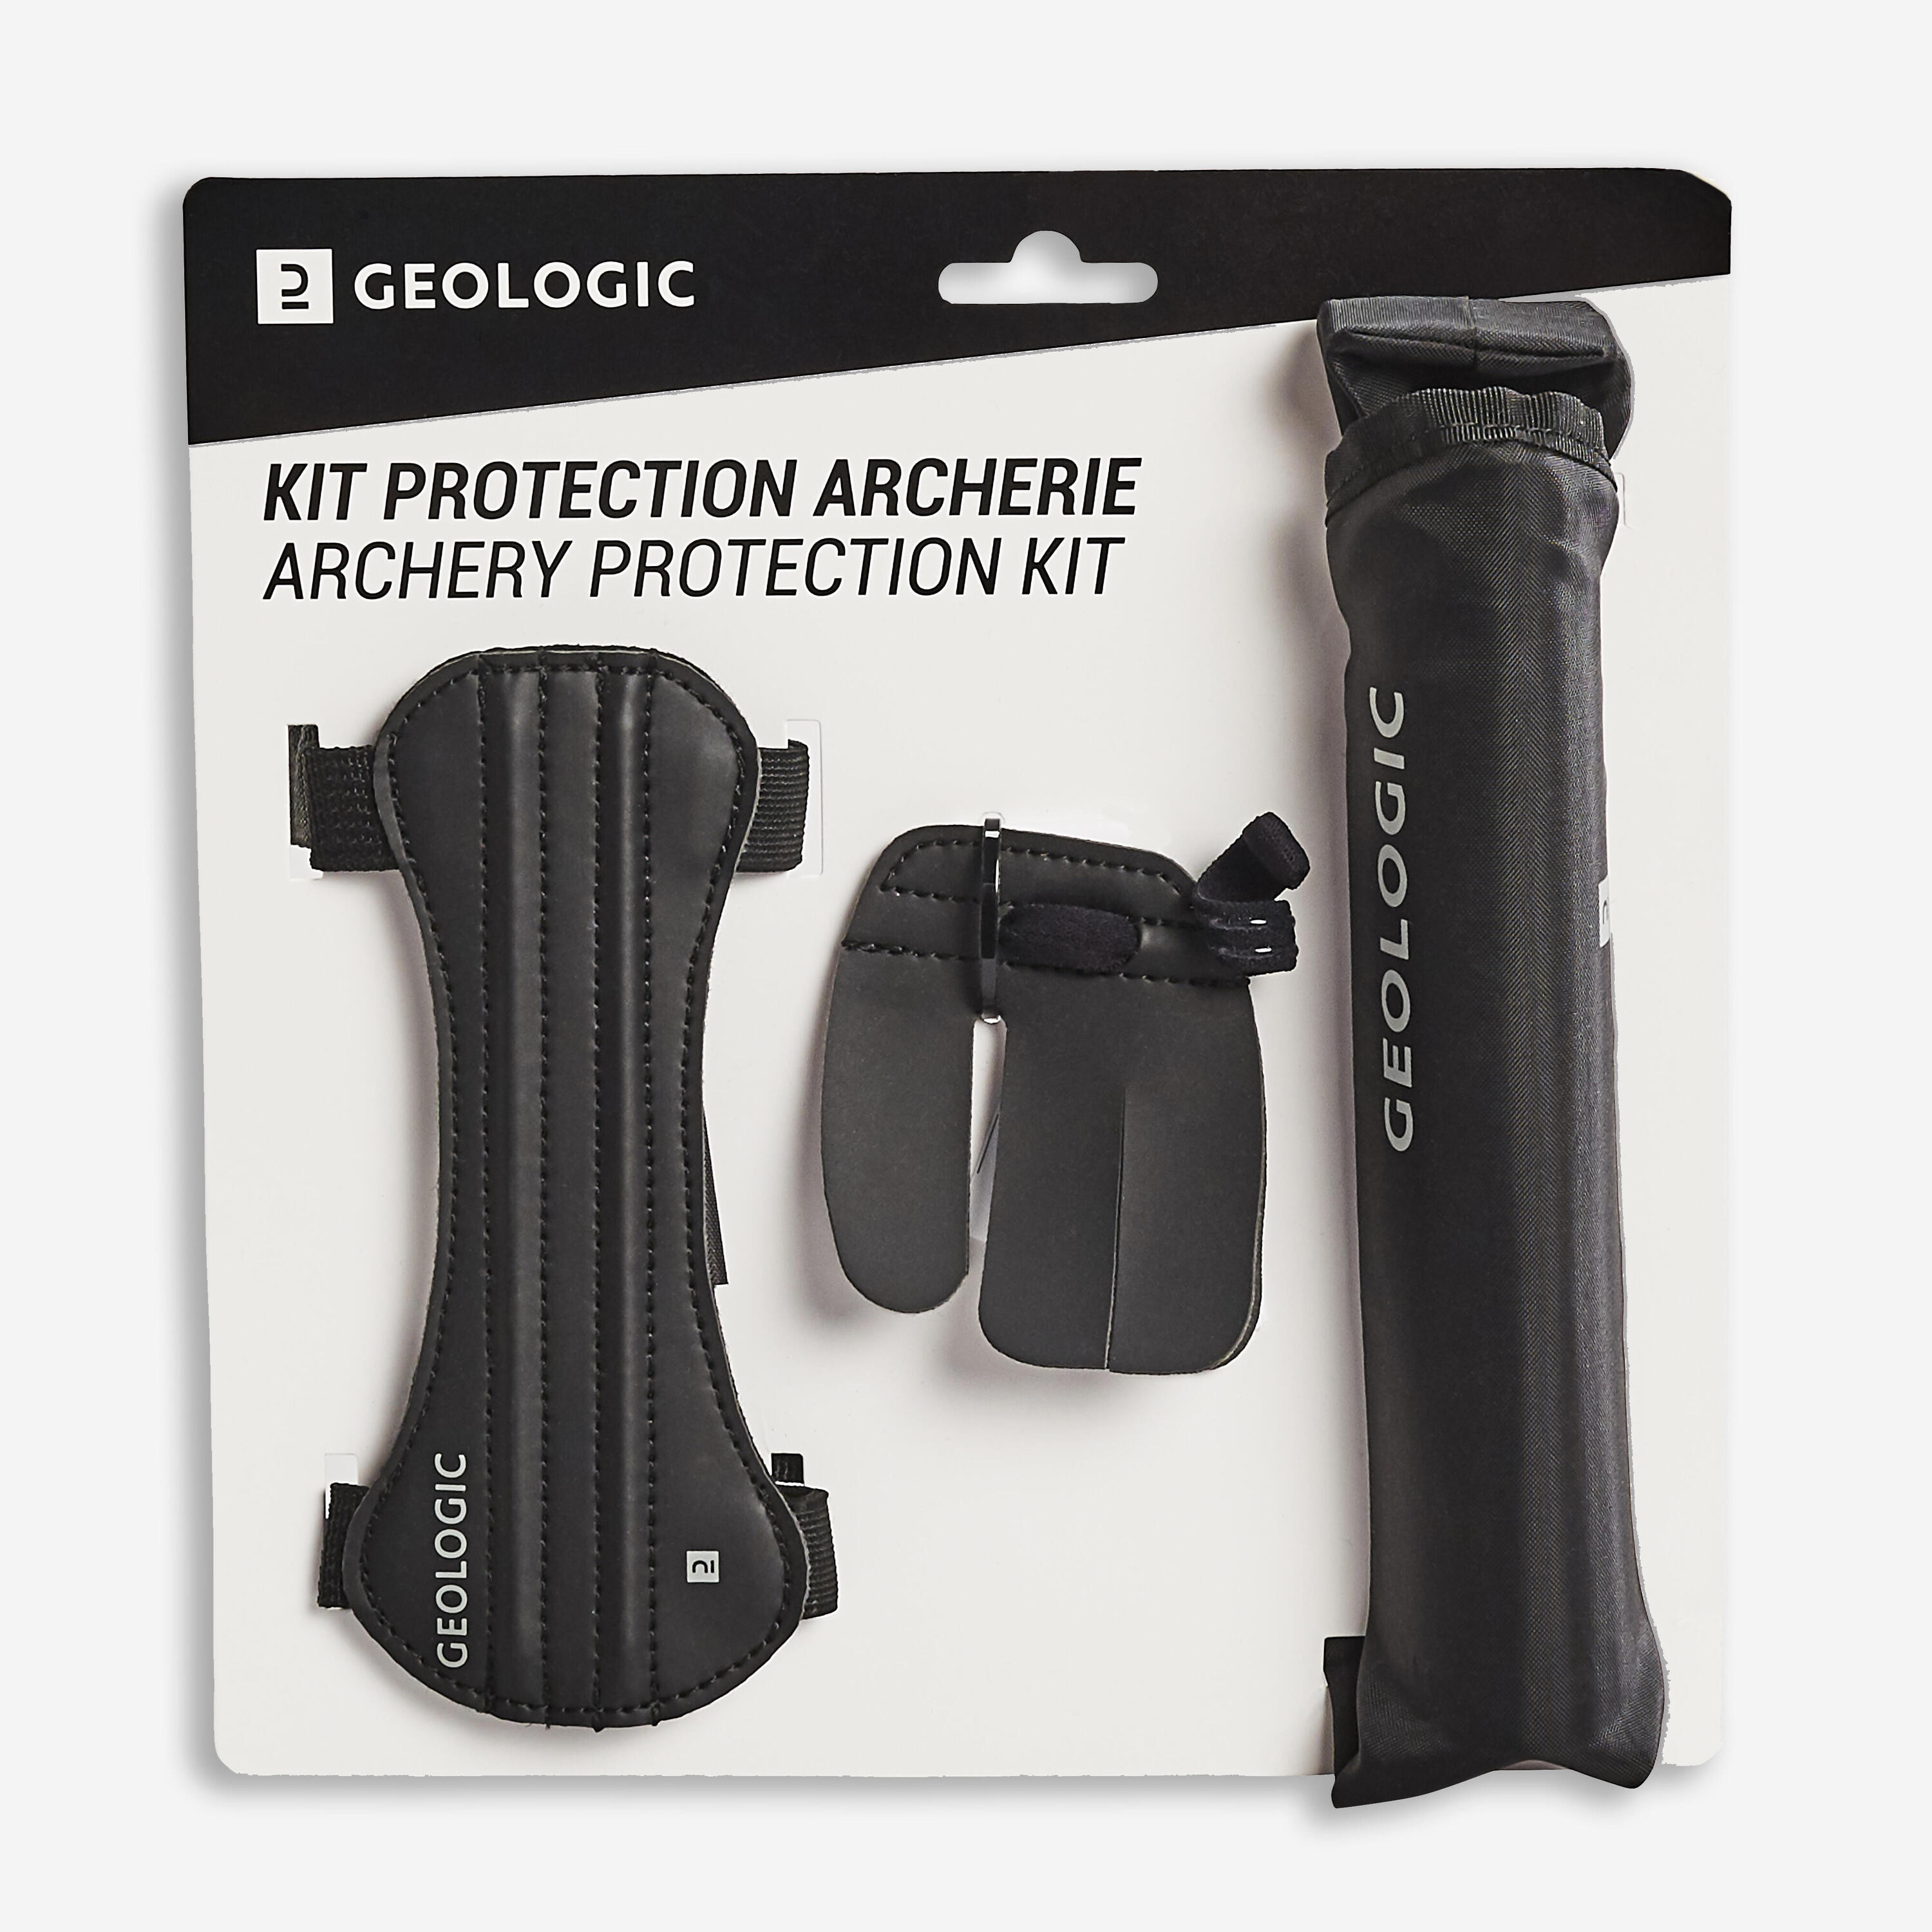 GEOLOGIC Protective Archery Kit for Archers